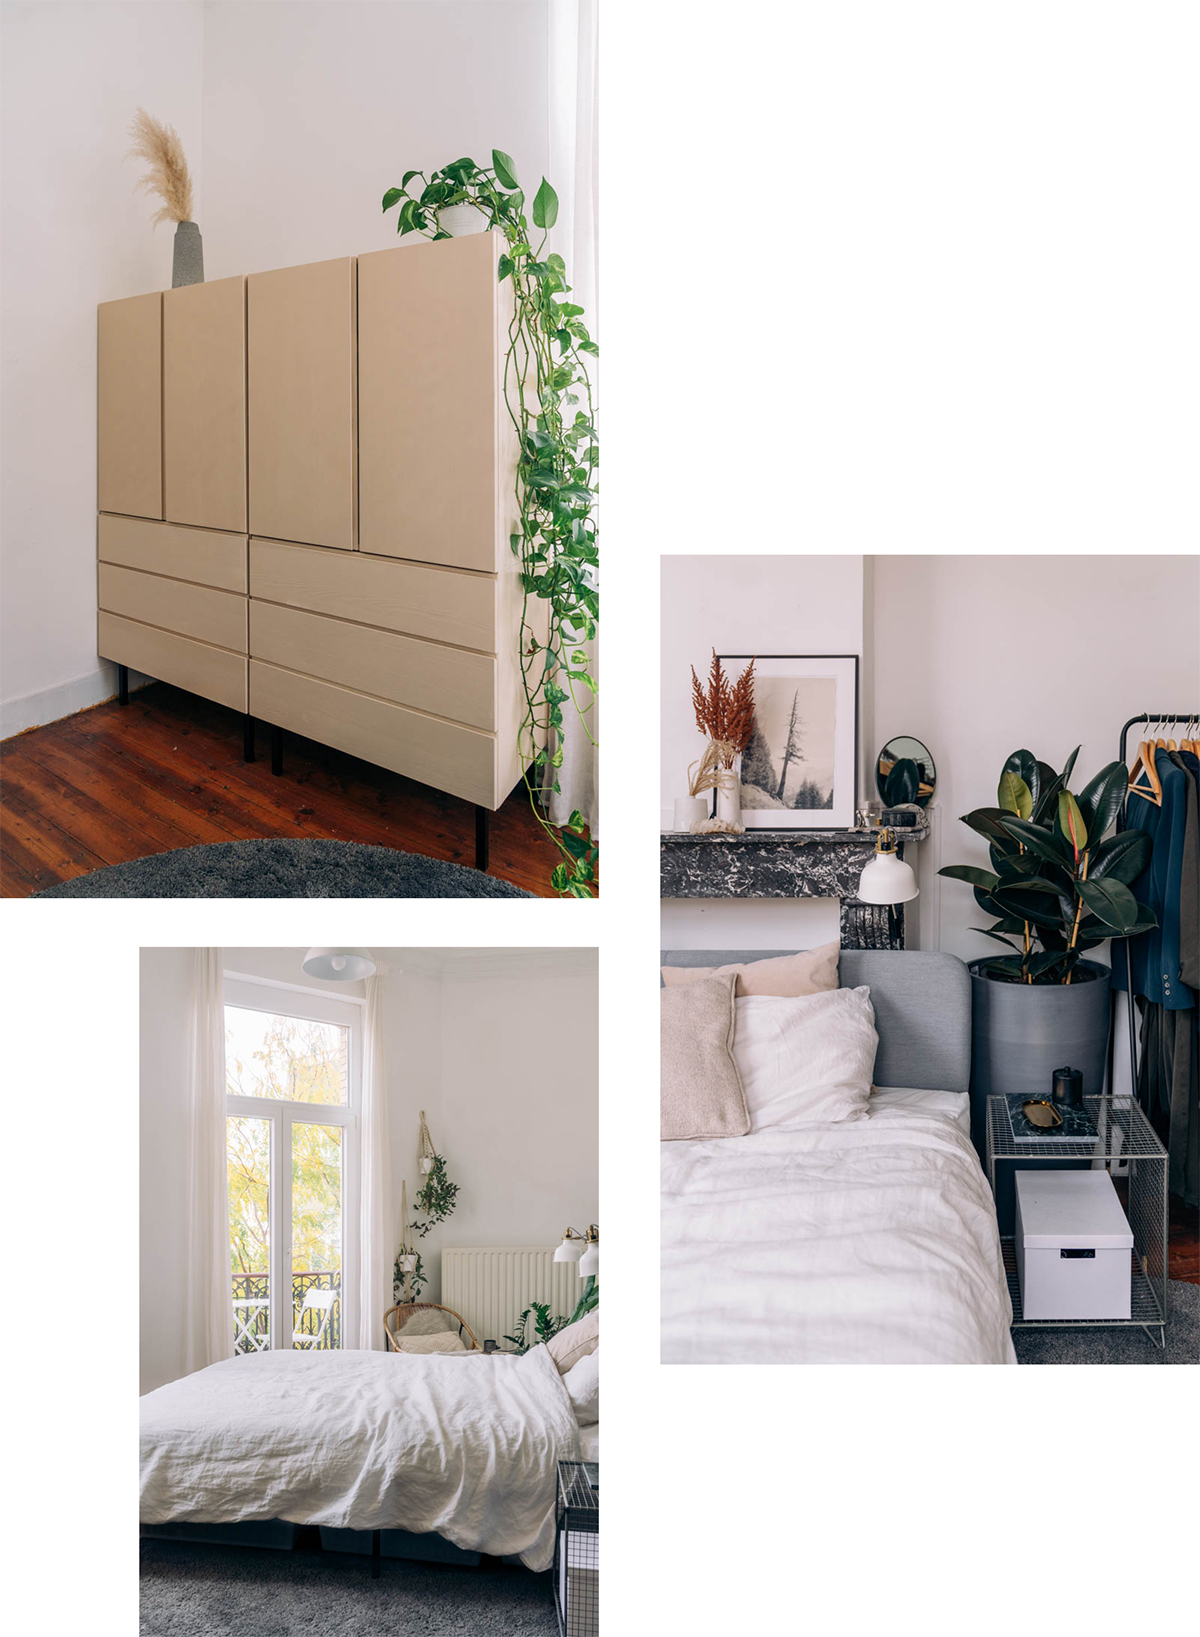 Ikea Ivar hack wardrobe - Hannelore Veelaert for aupaysdesmerveillesblog.be